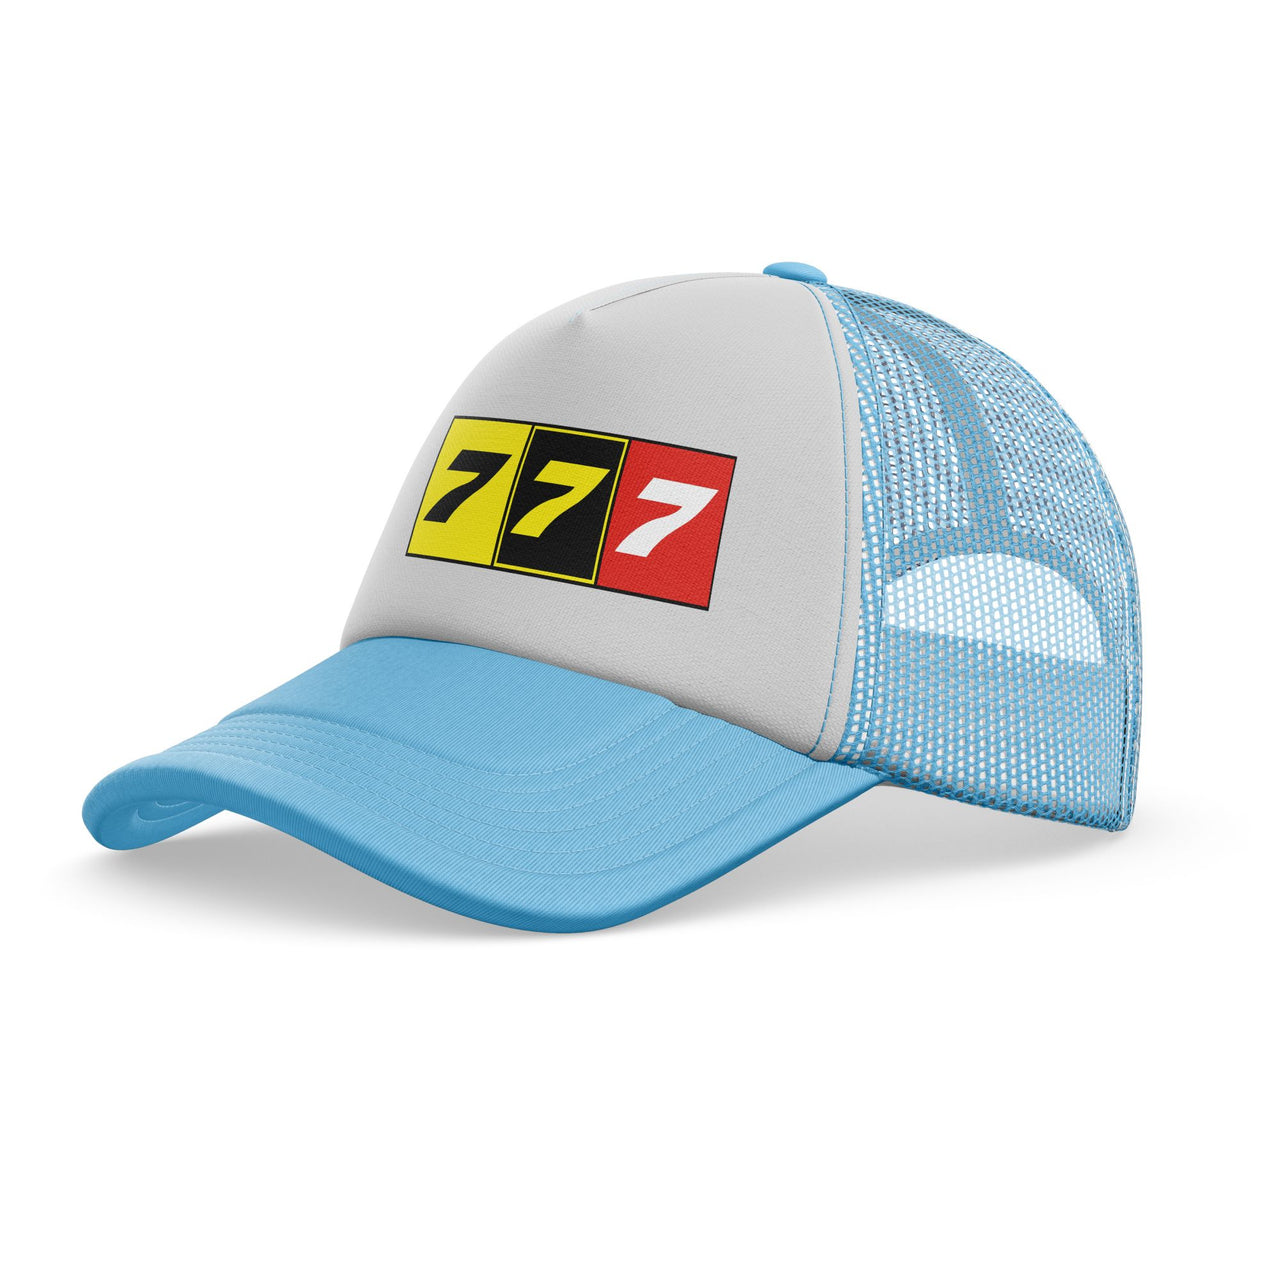 Flat Colourful 777 Designed Trucker Caps & Hats